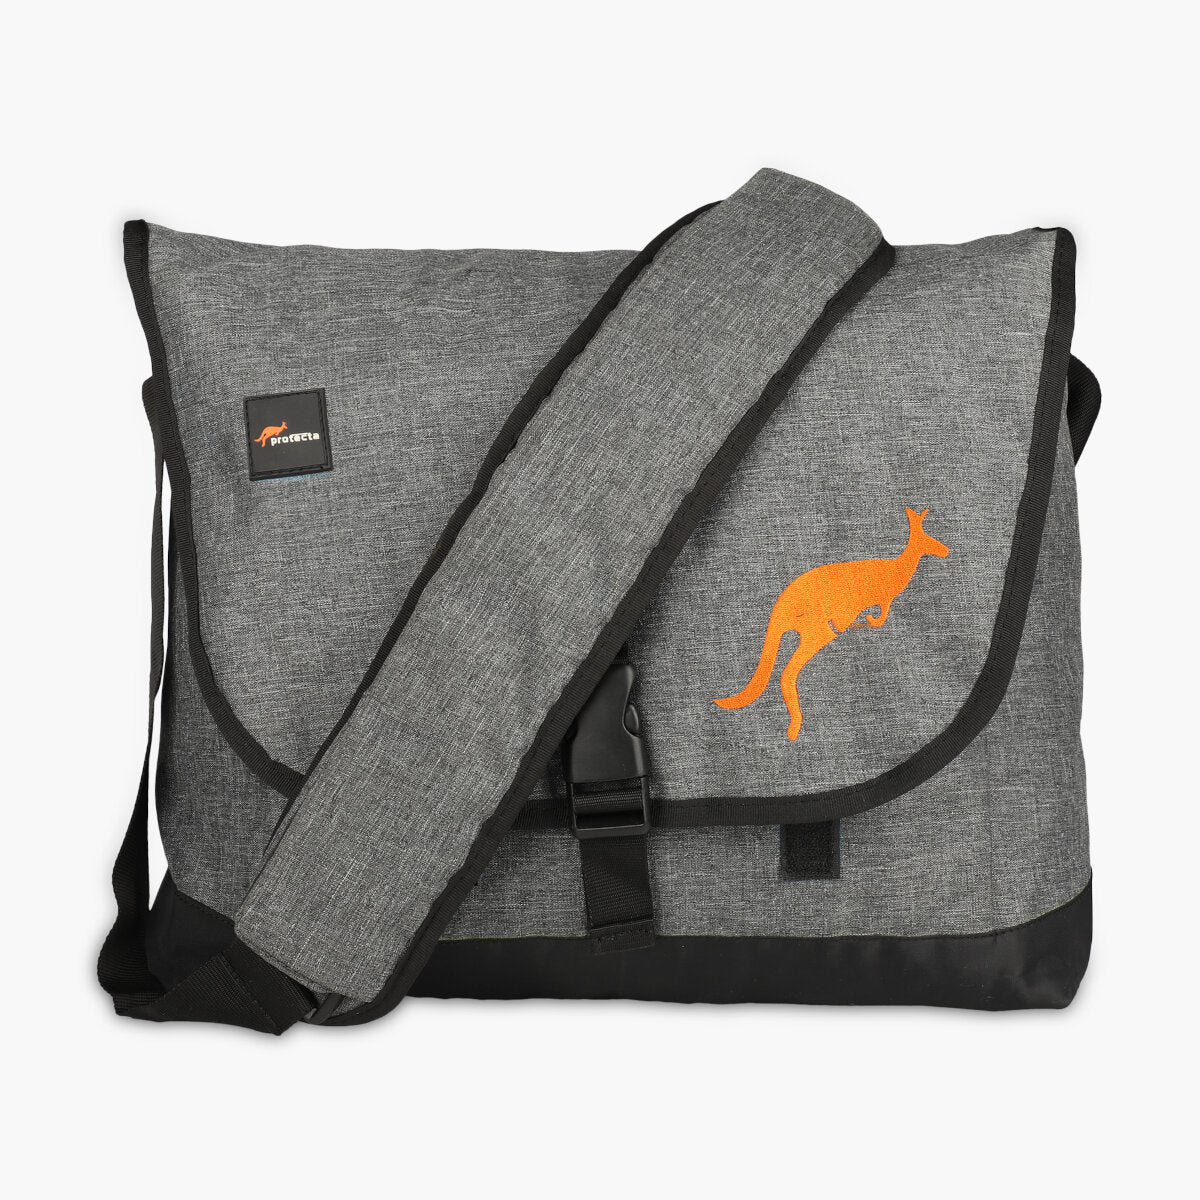 Stone Grey, Protecta Leap Laptop Office Messenger Bag-6